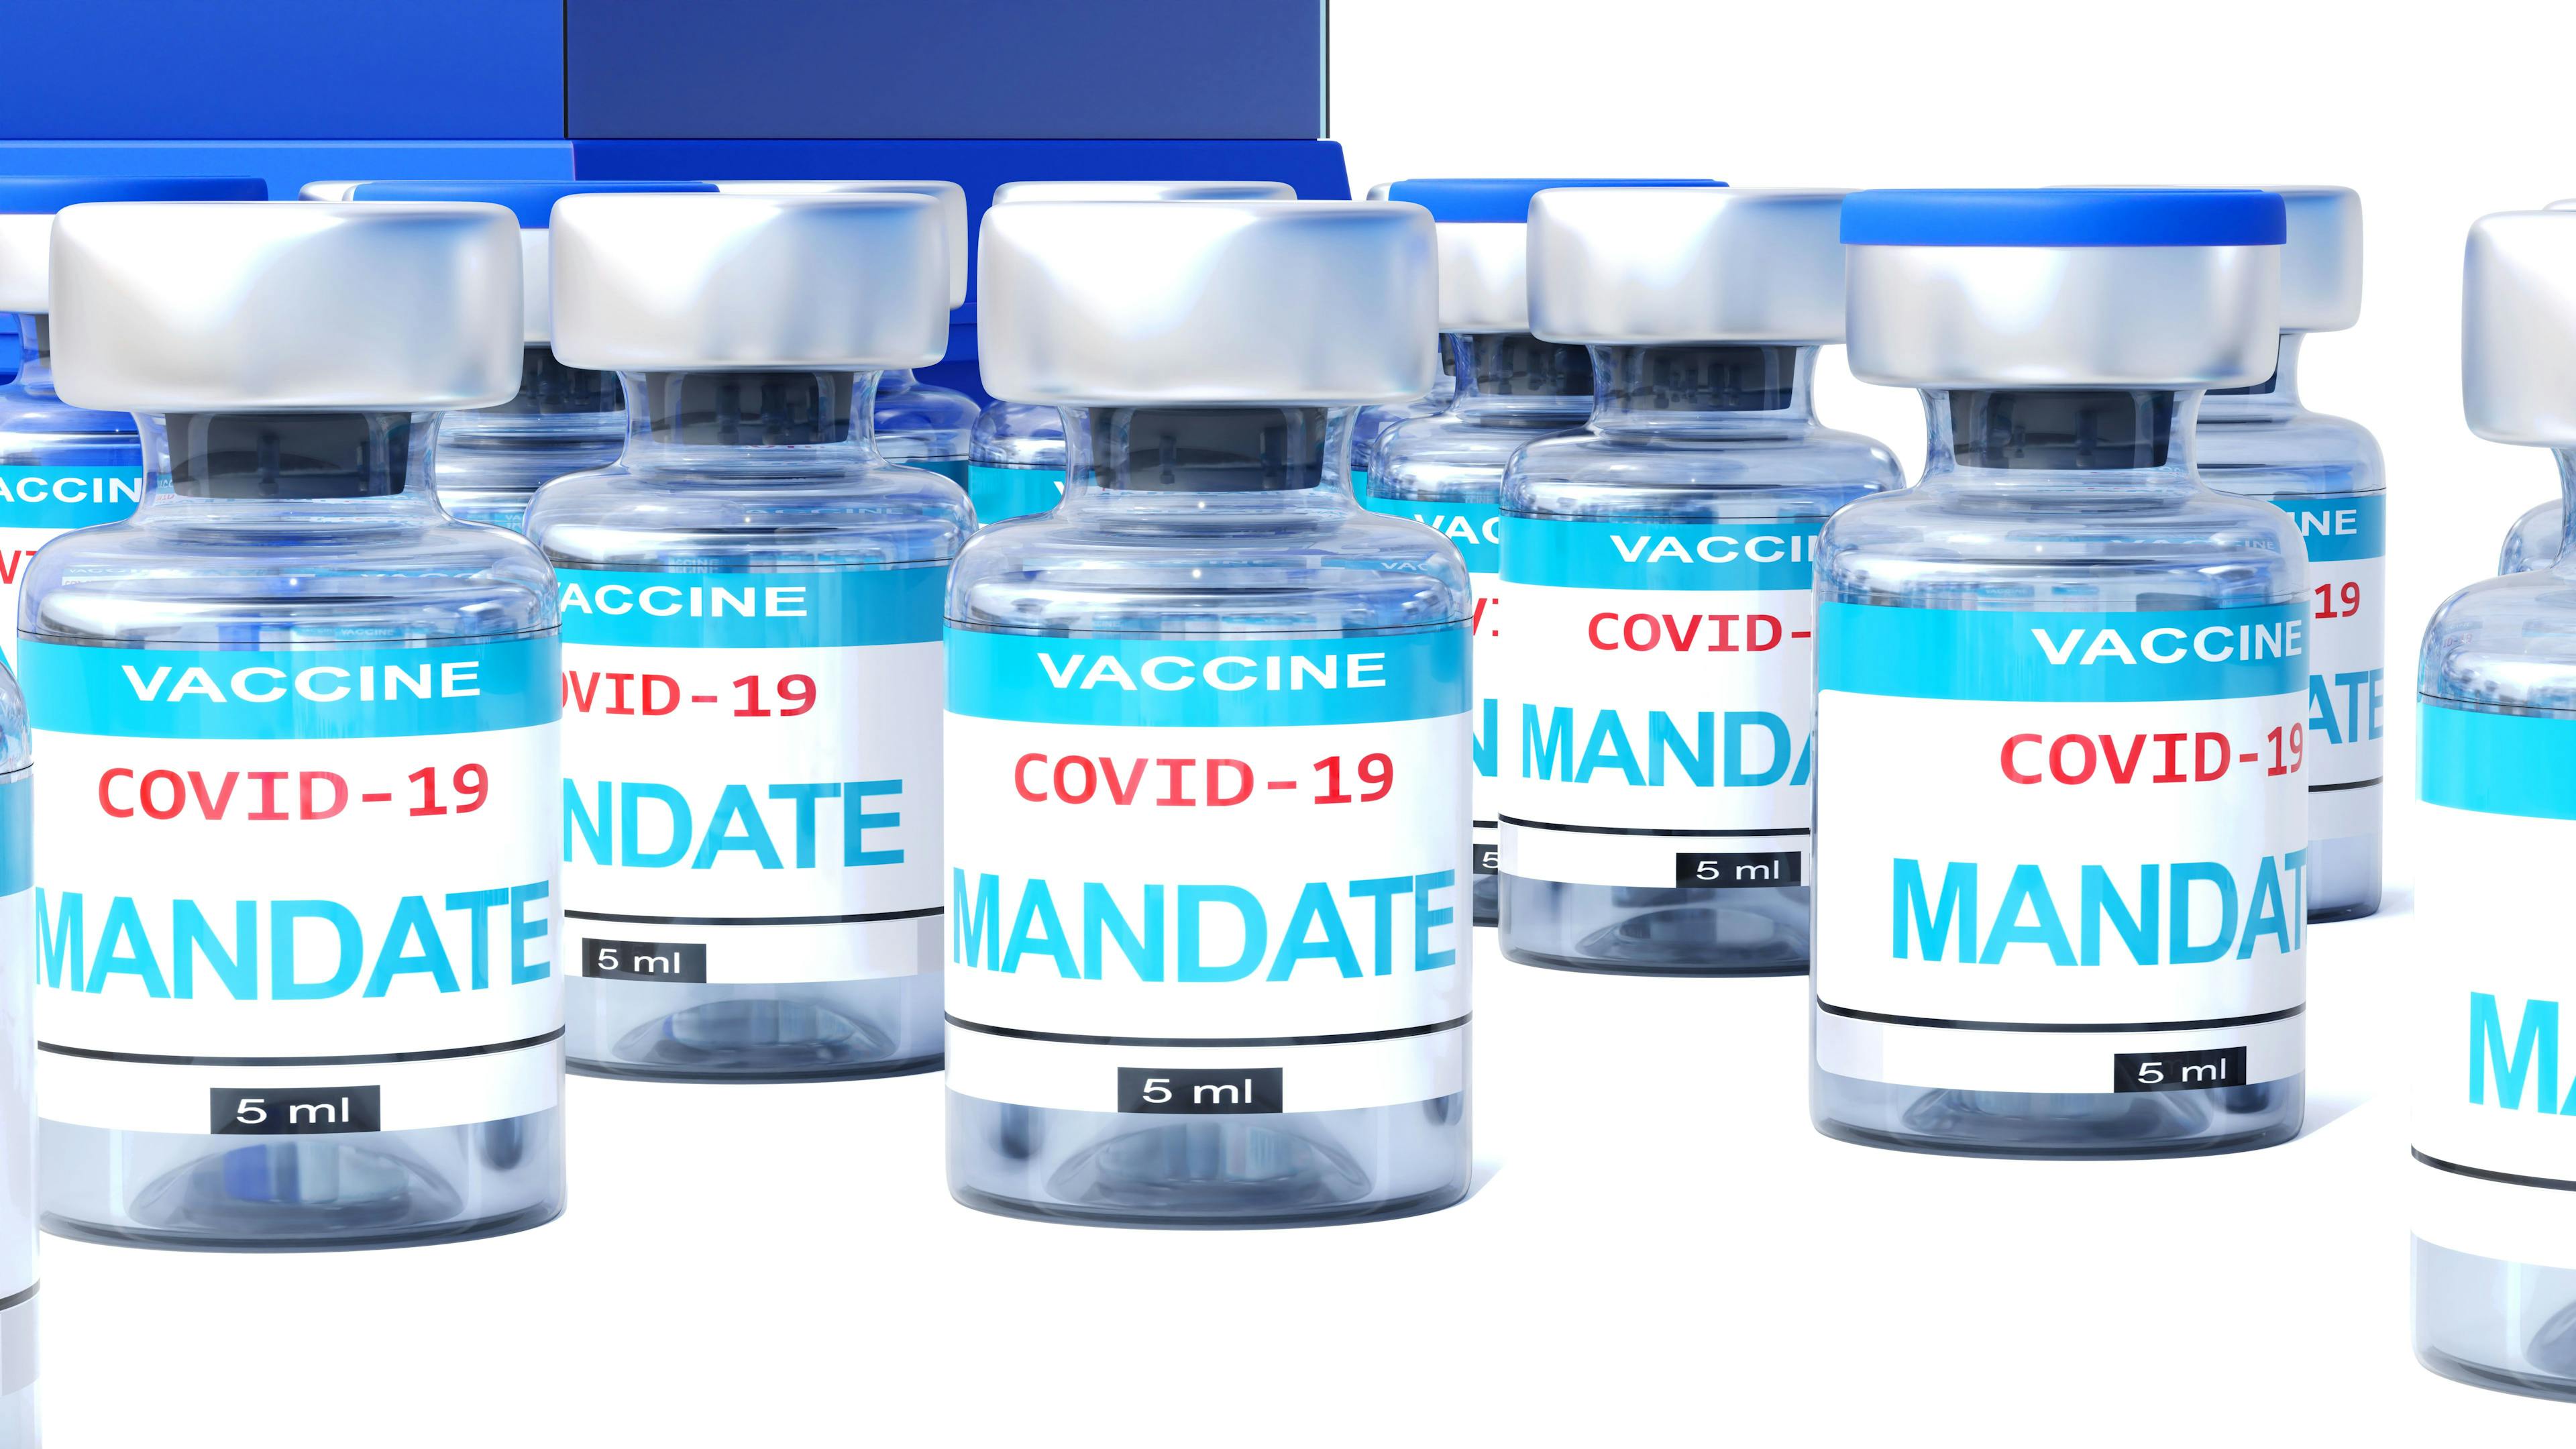 White House report: COVID-19 vaccine mandates working